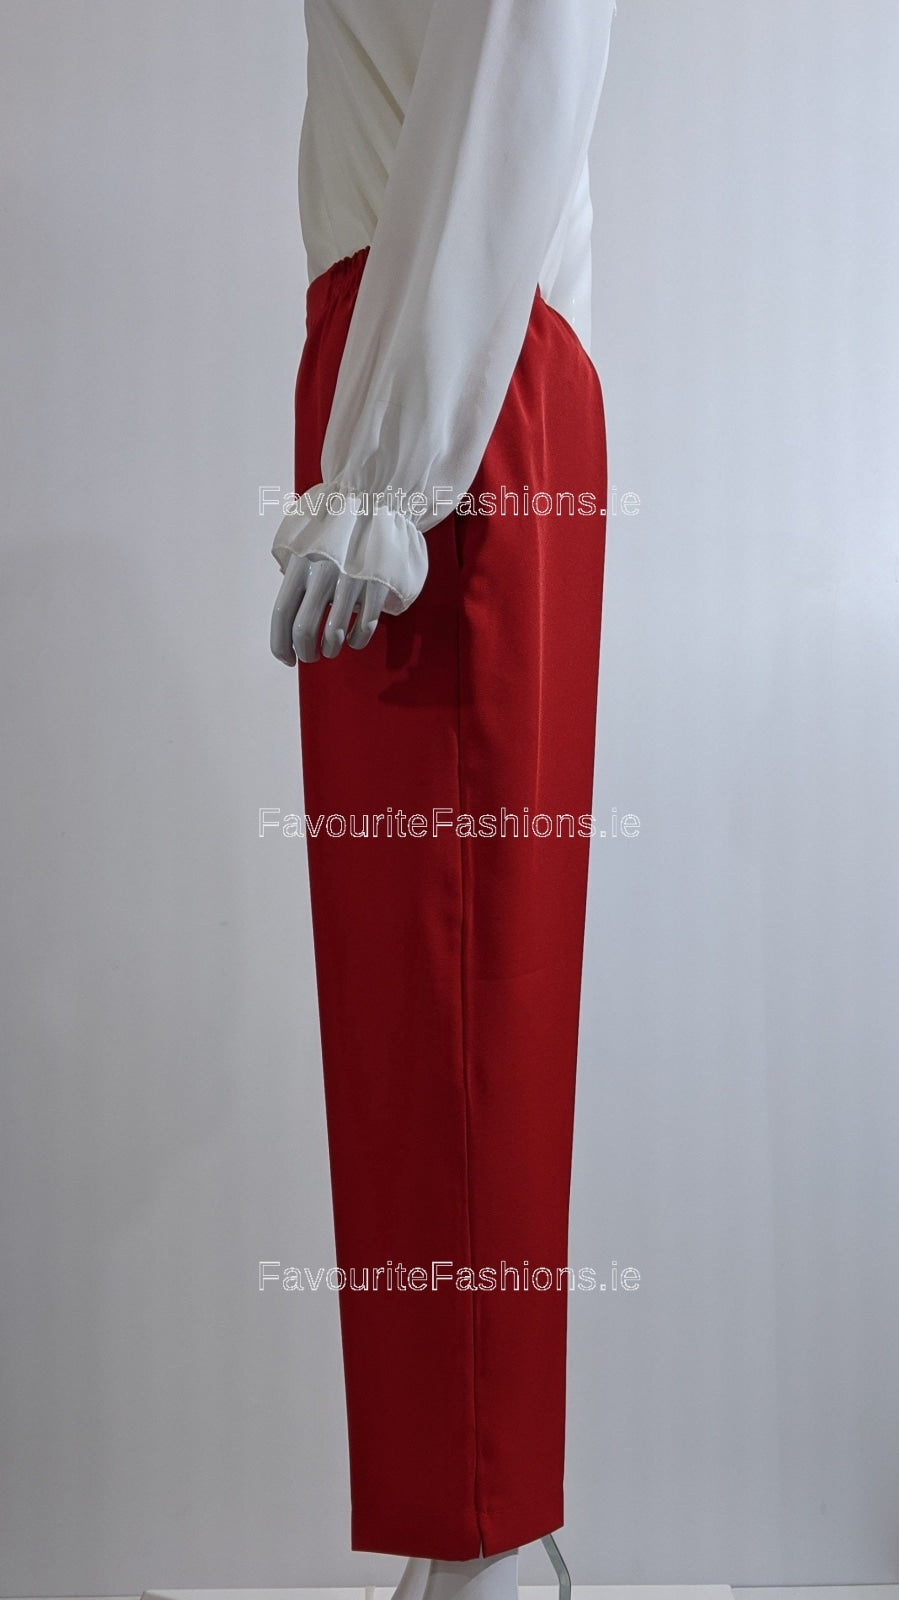 Red Elasticated Waist Pocket Trouser